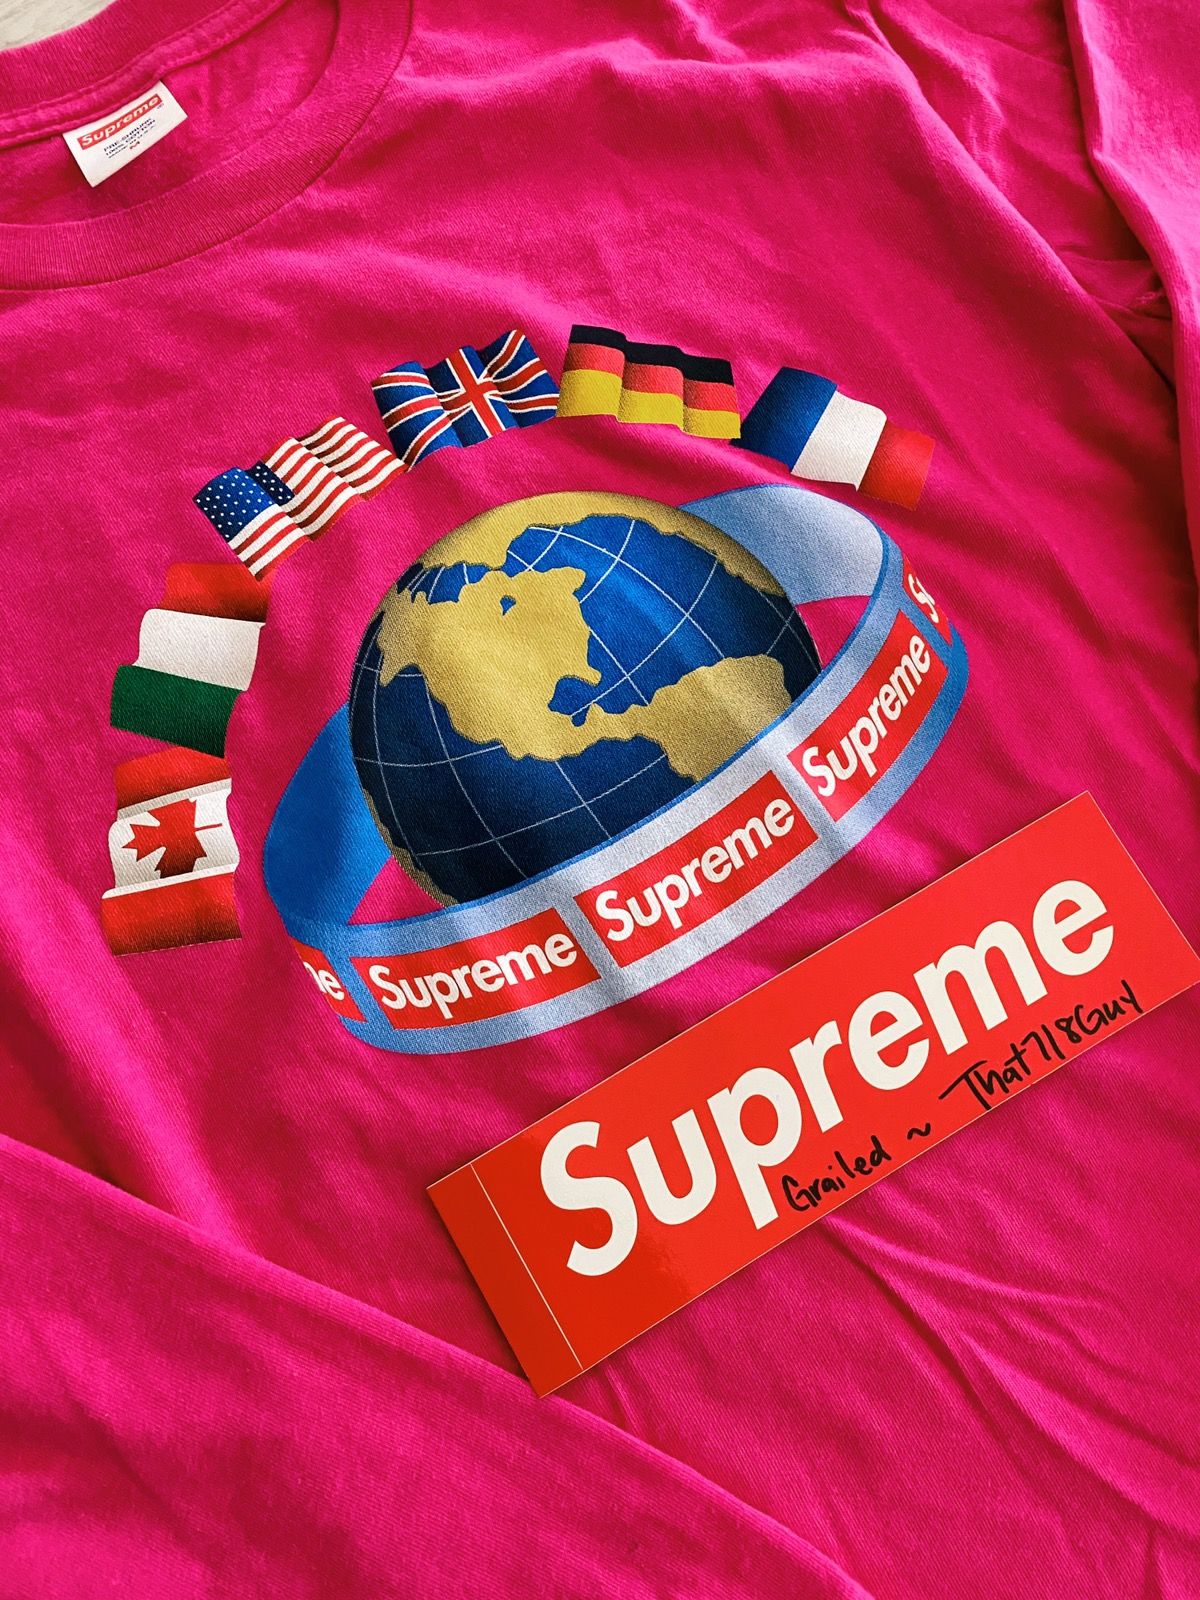 Supreme Supreme New York “Worldwide” Long Sleeve Tee Hot Pink